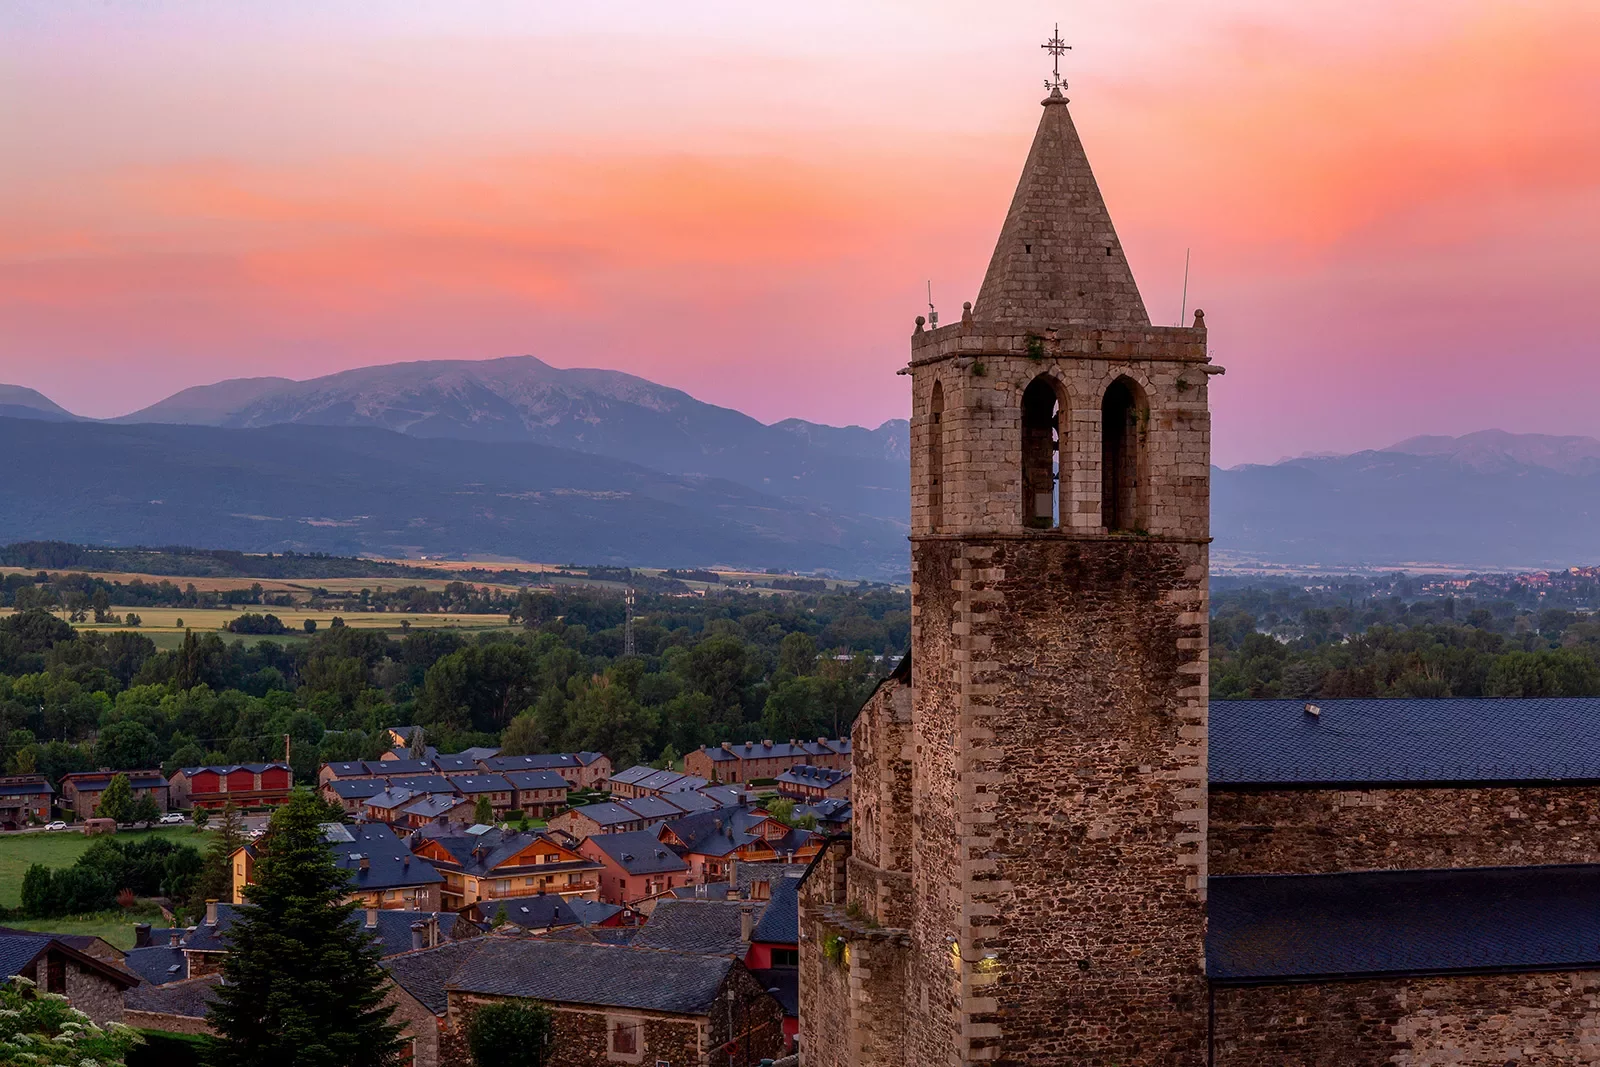 Shot of Spanish village during sunset, large church clock-tower at center.